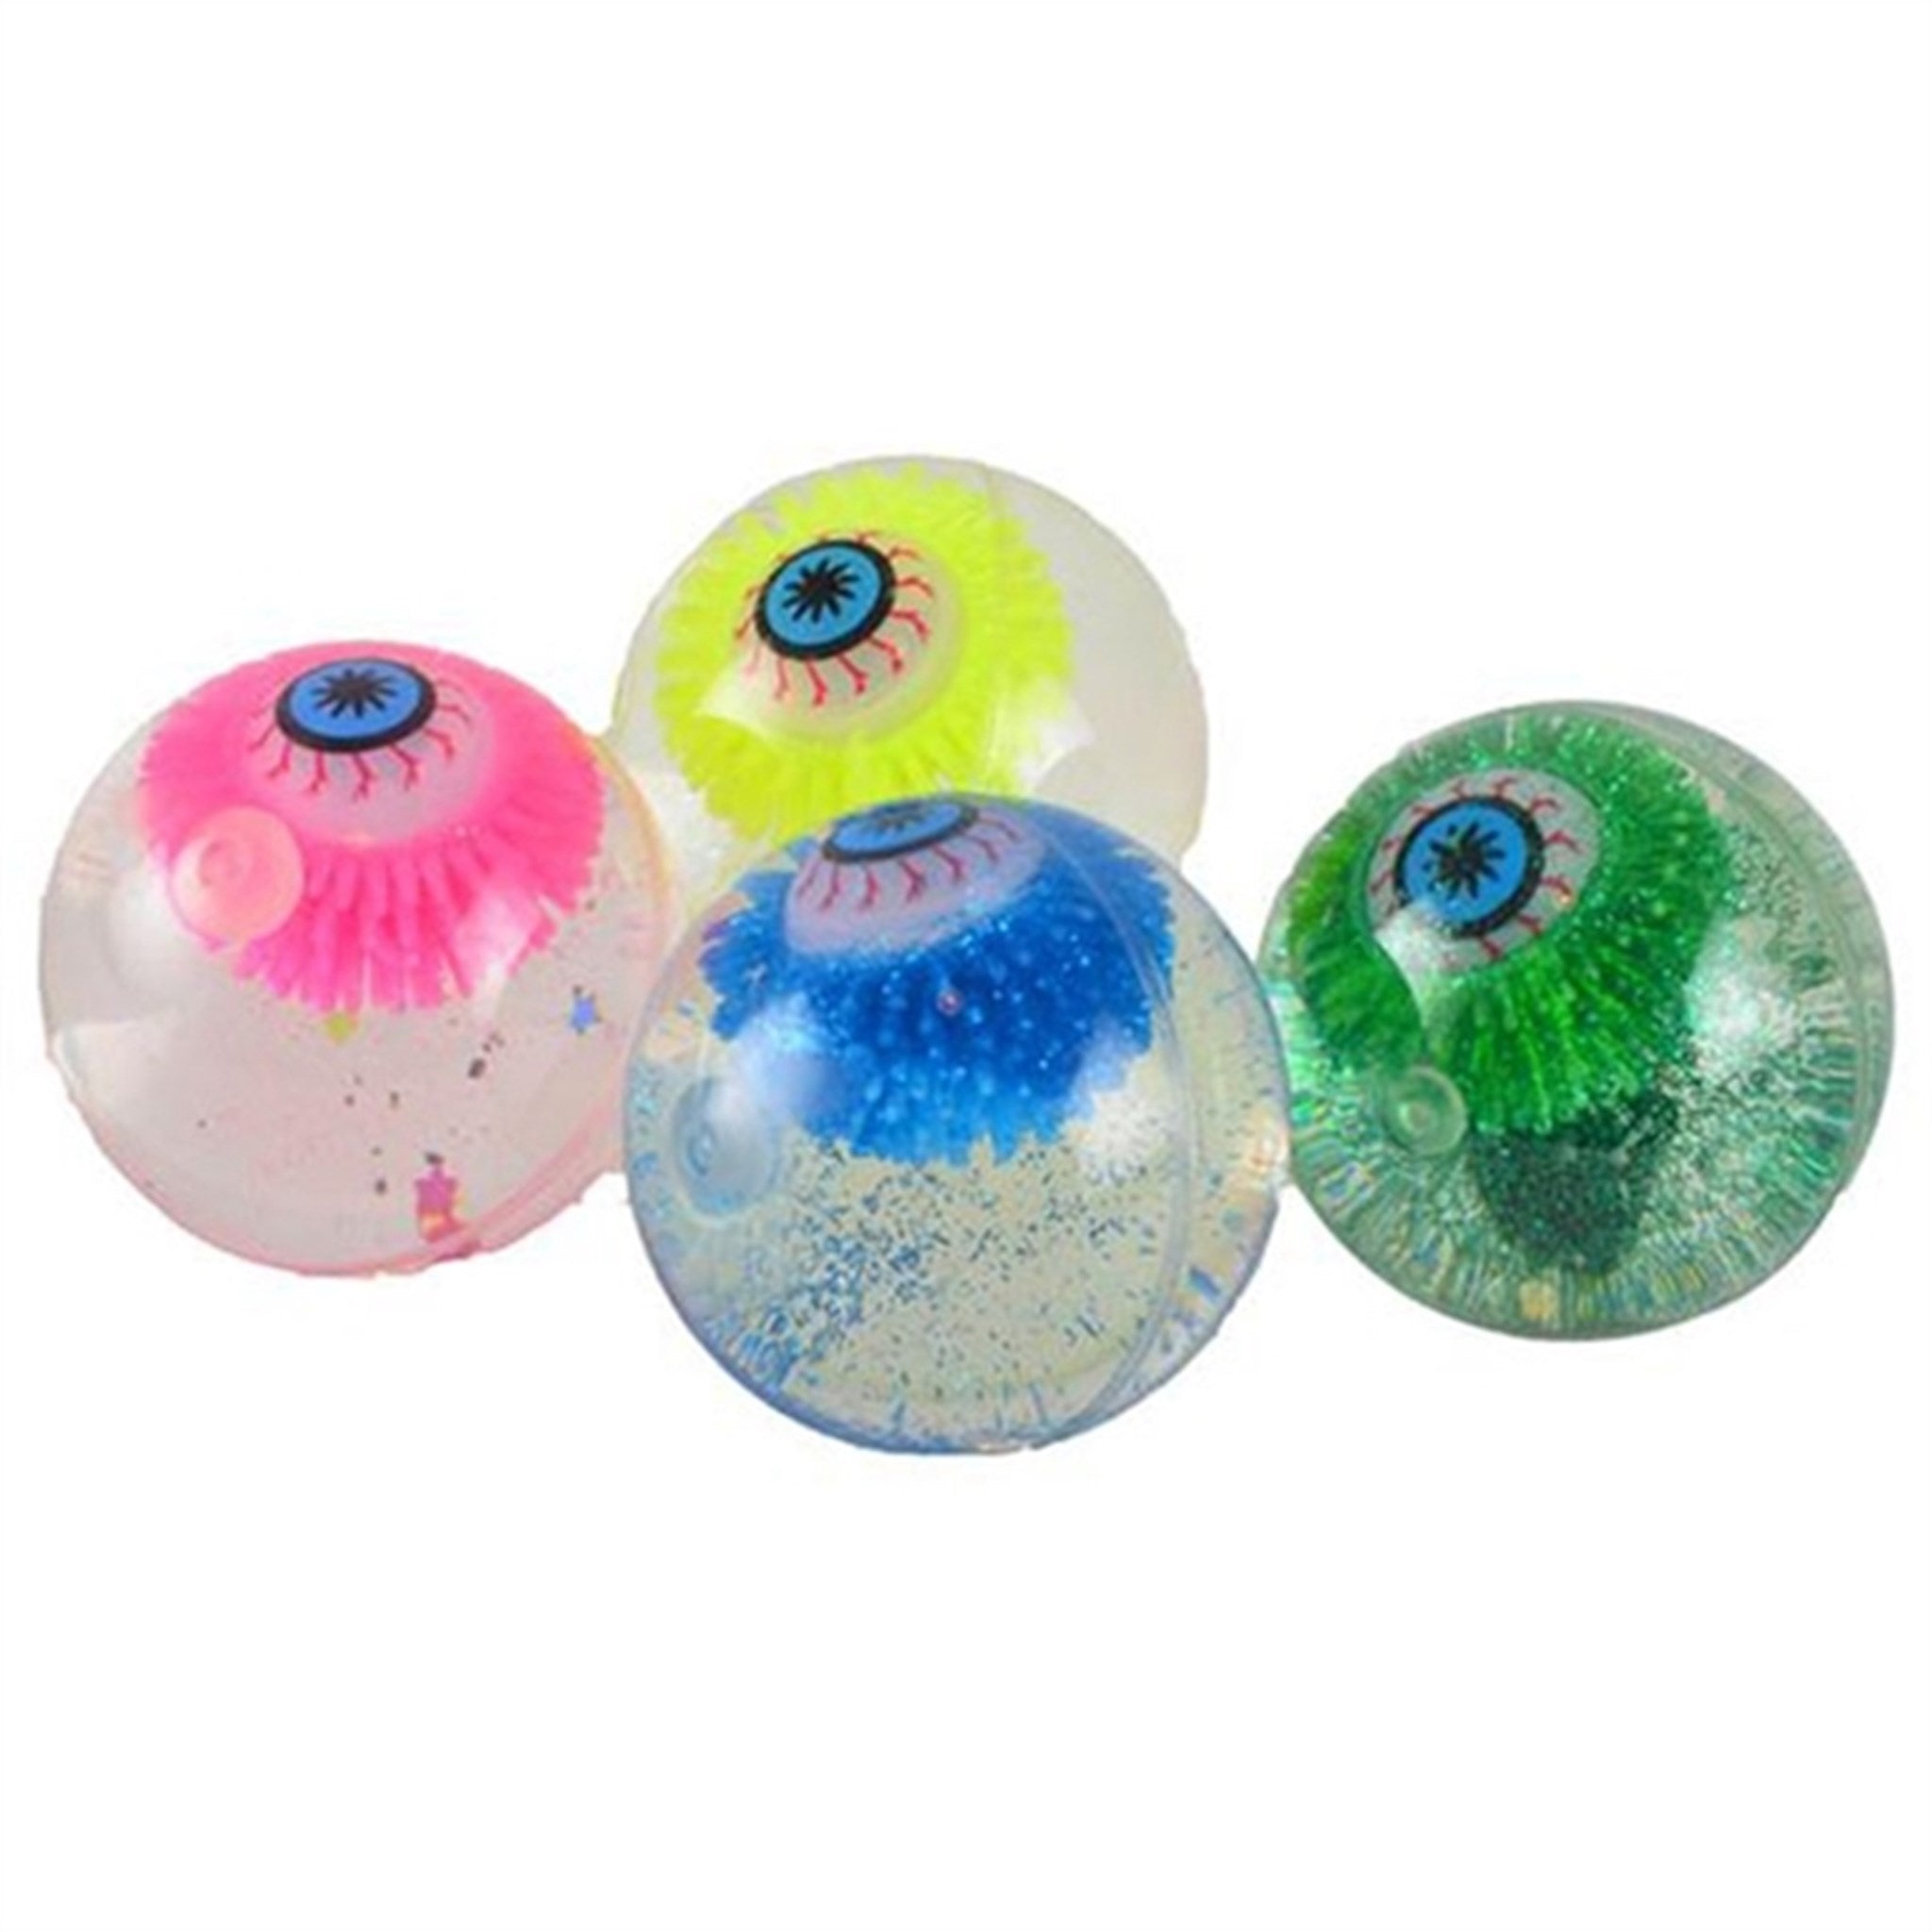 Magni Bouncing Ball 'Eye' with Light